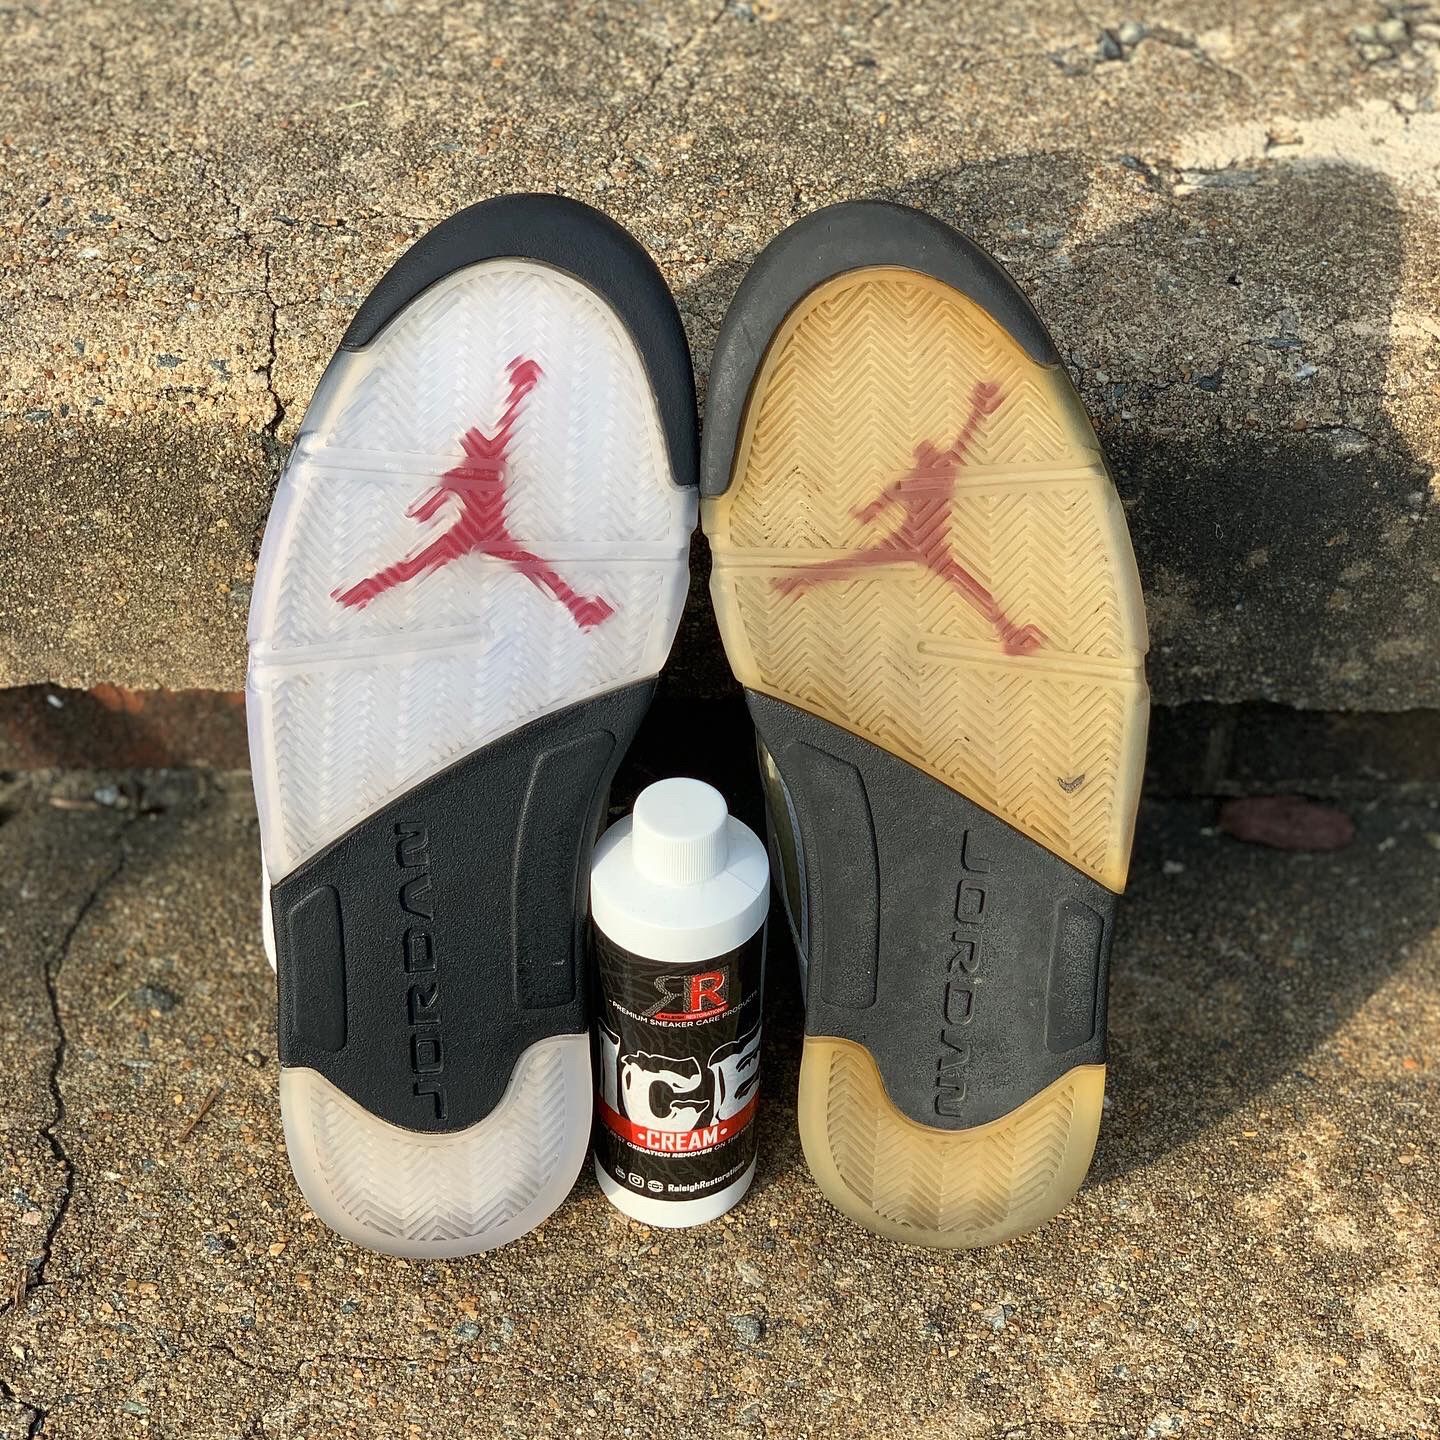 Air Jordan / Nike / Adidas shoe RESTORATIONS